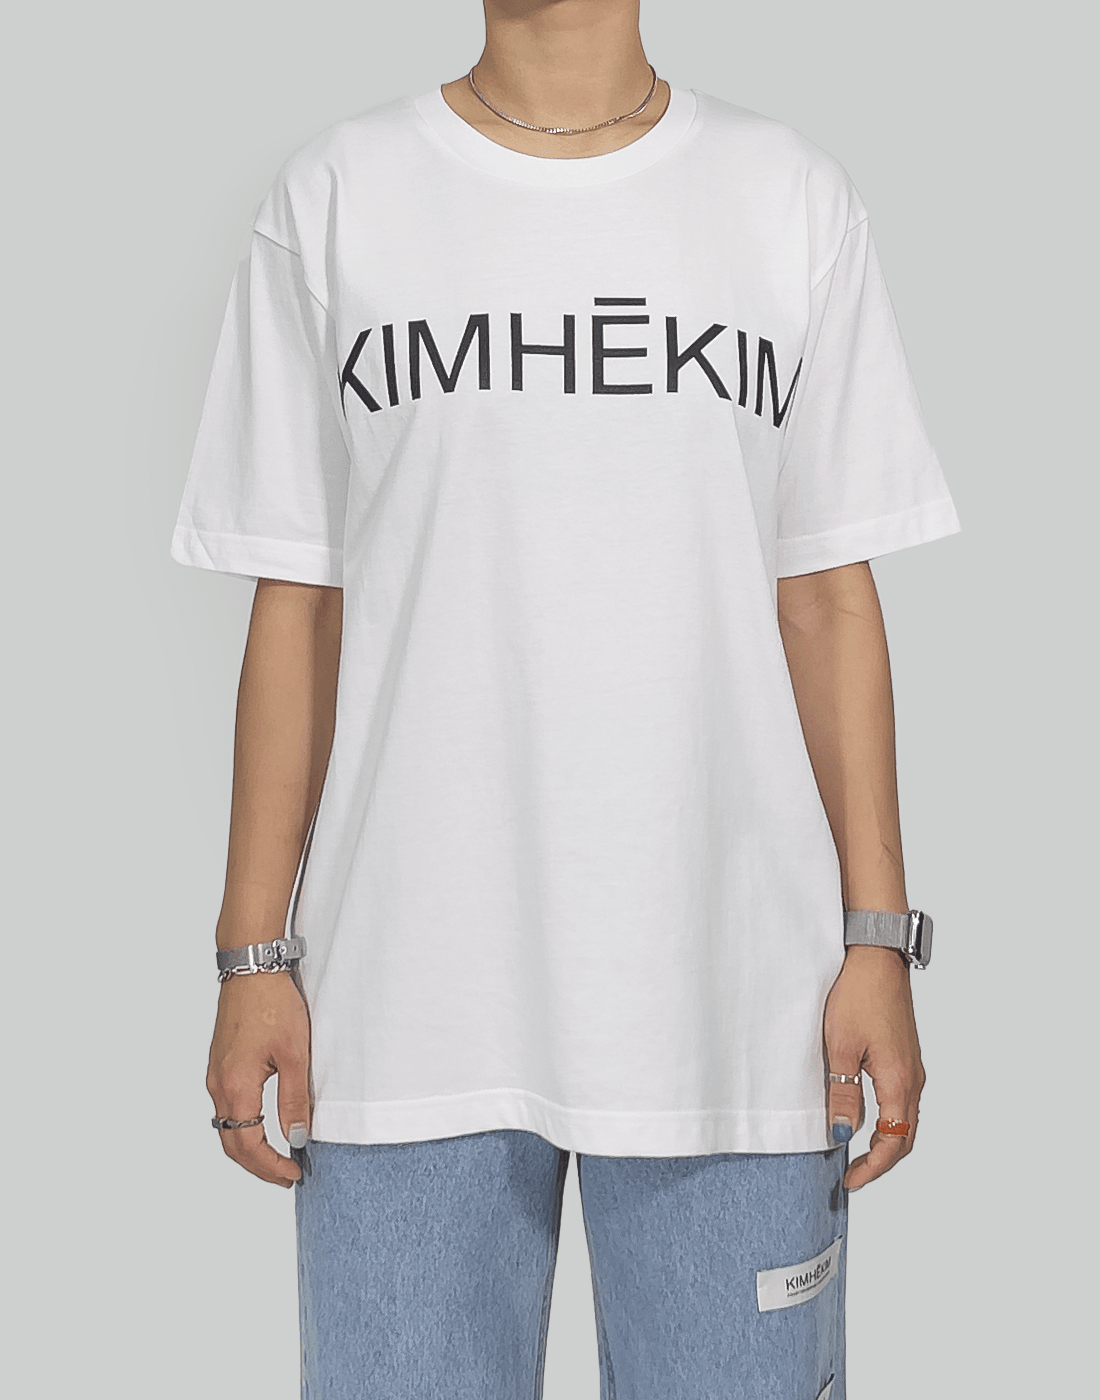 KIMHEKIM T-SHIRTS – 082plus